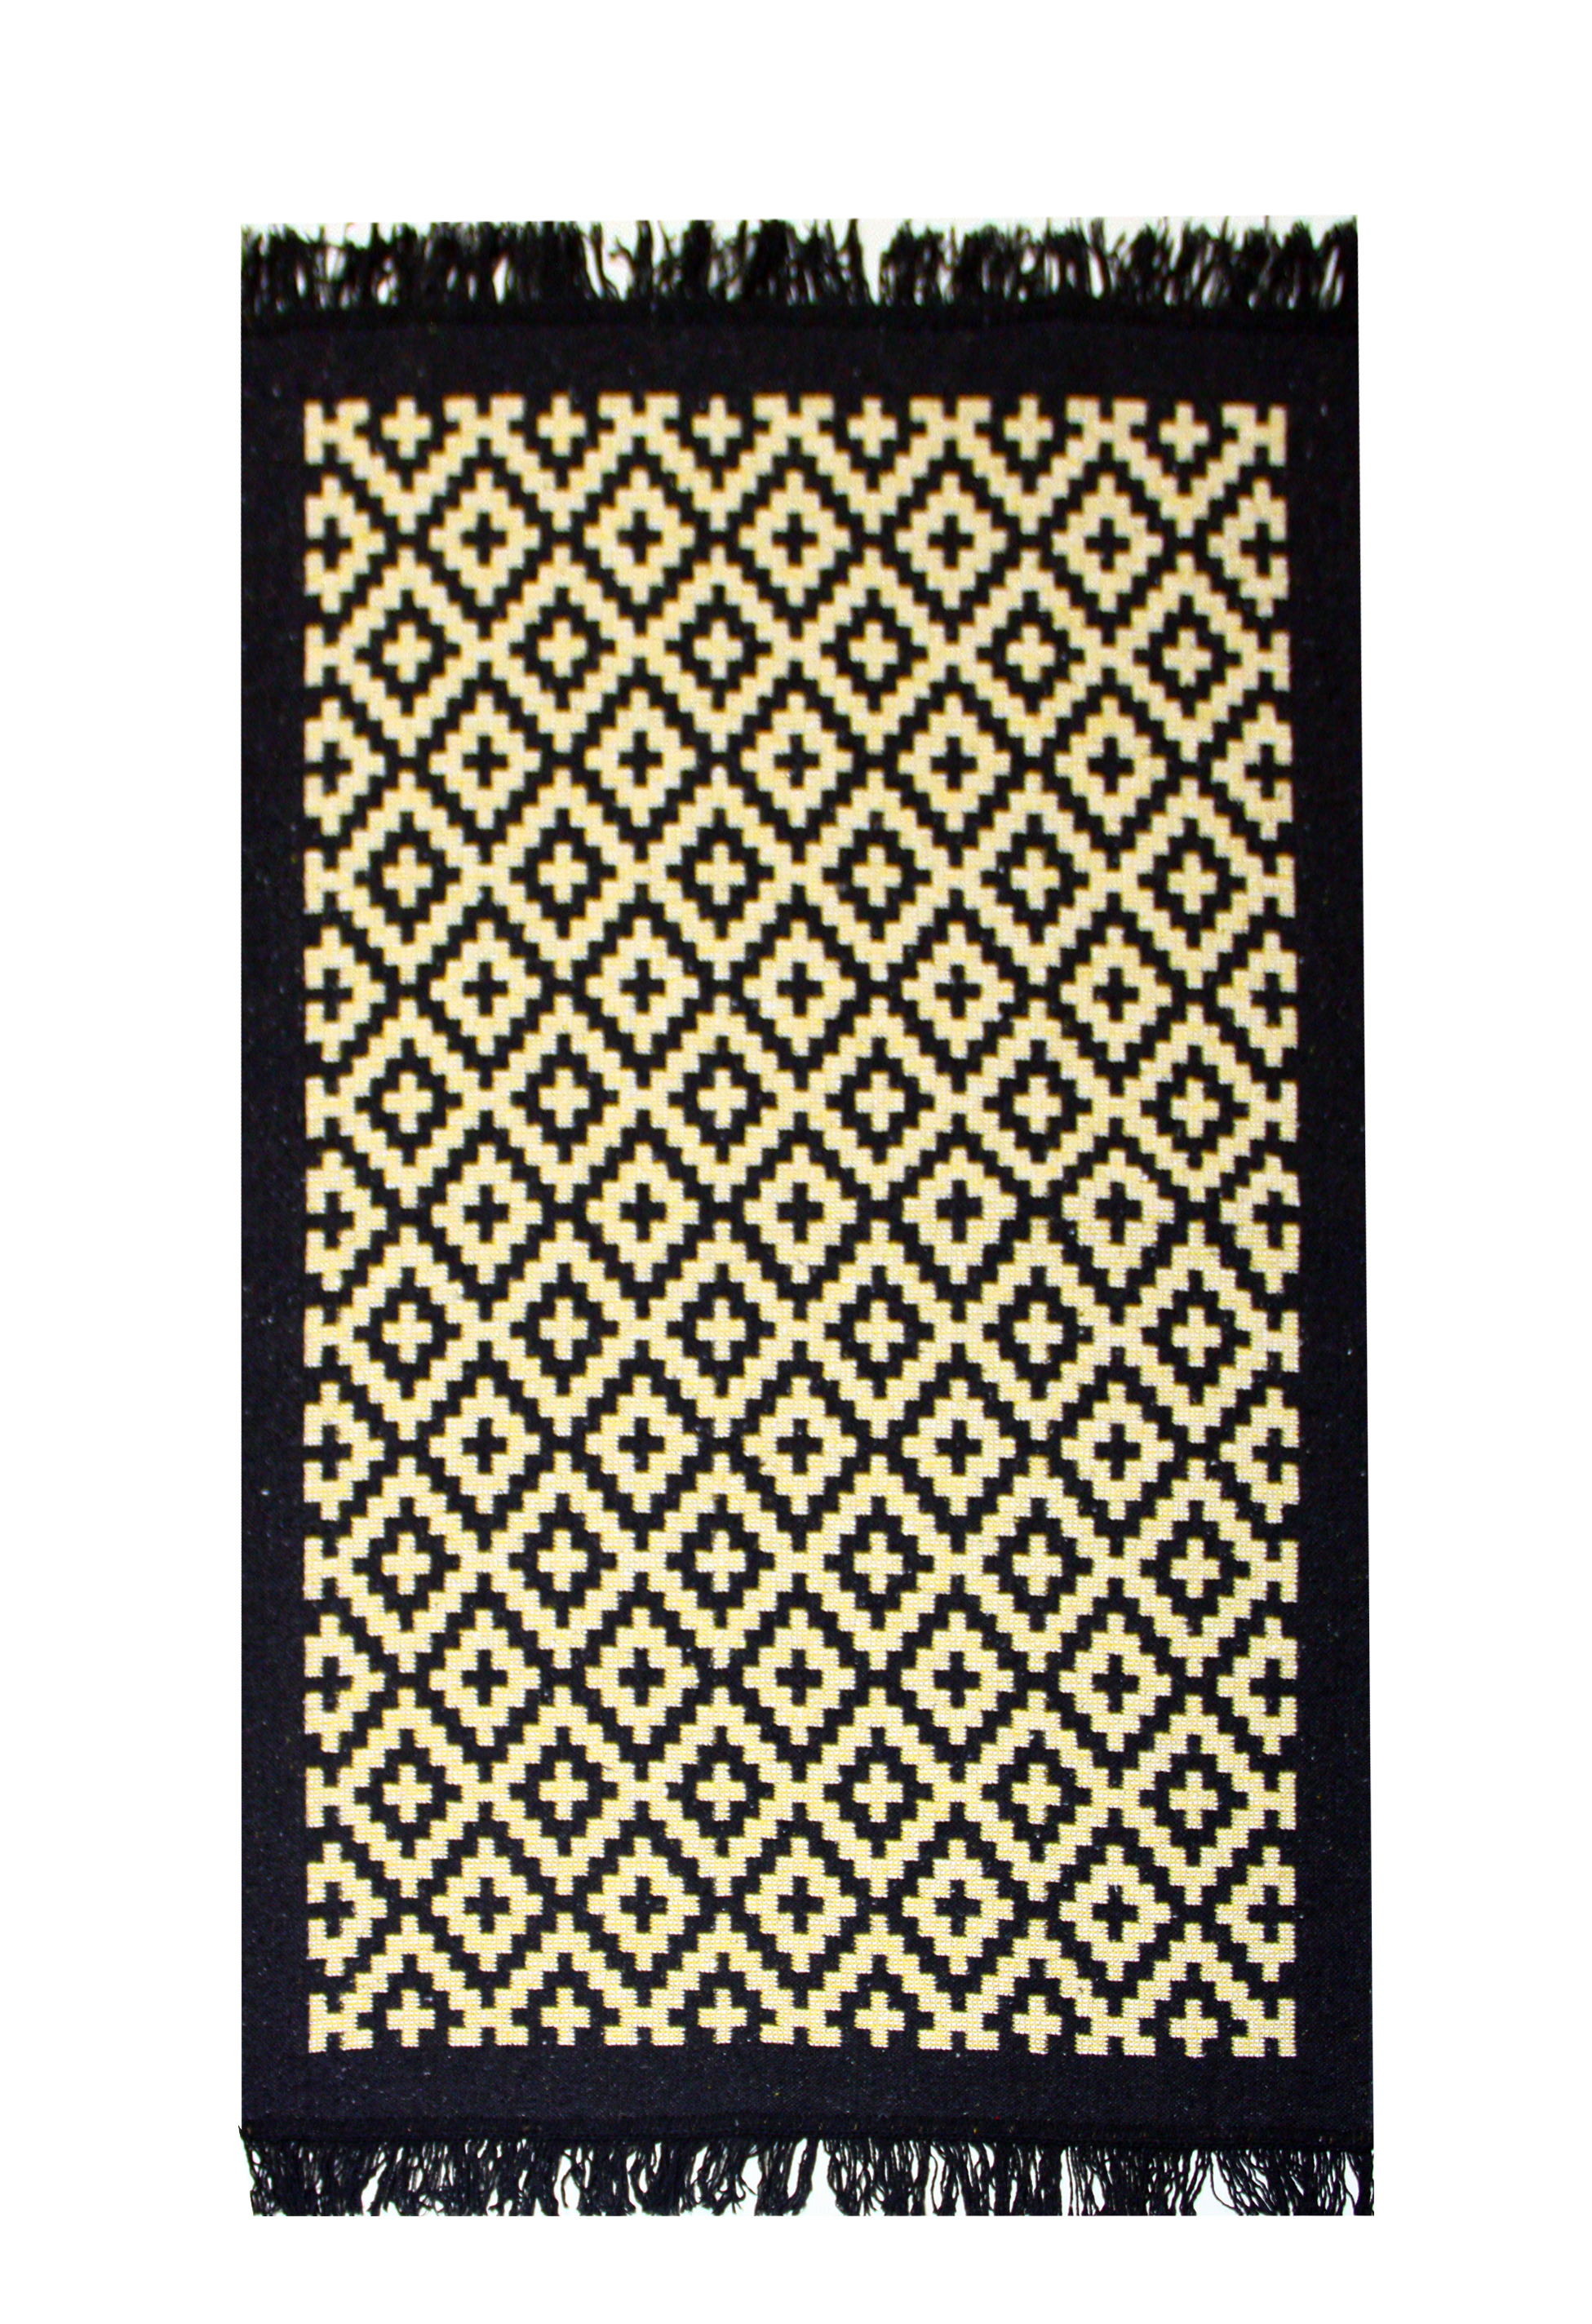 Ковер двусторонний IzziHome Lara Siyah Sari Lr01, 180х120 см, черный с желтым (2200000554291) - фото 2